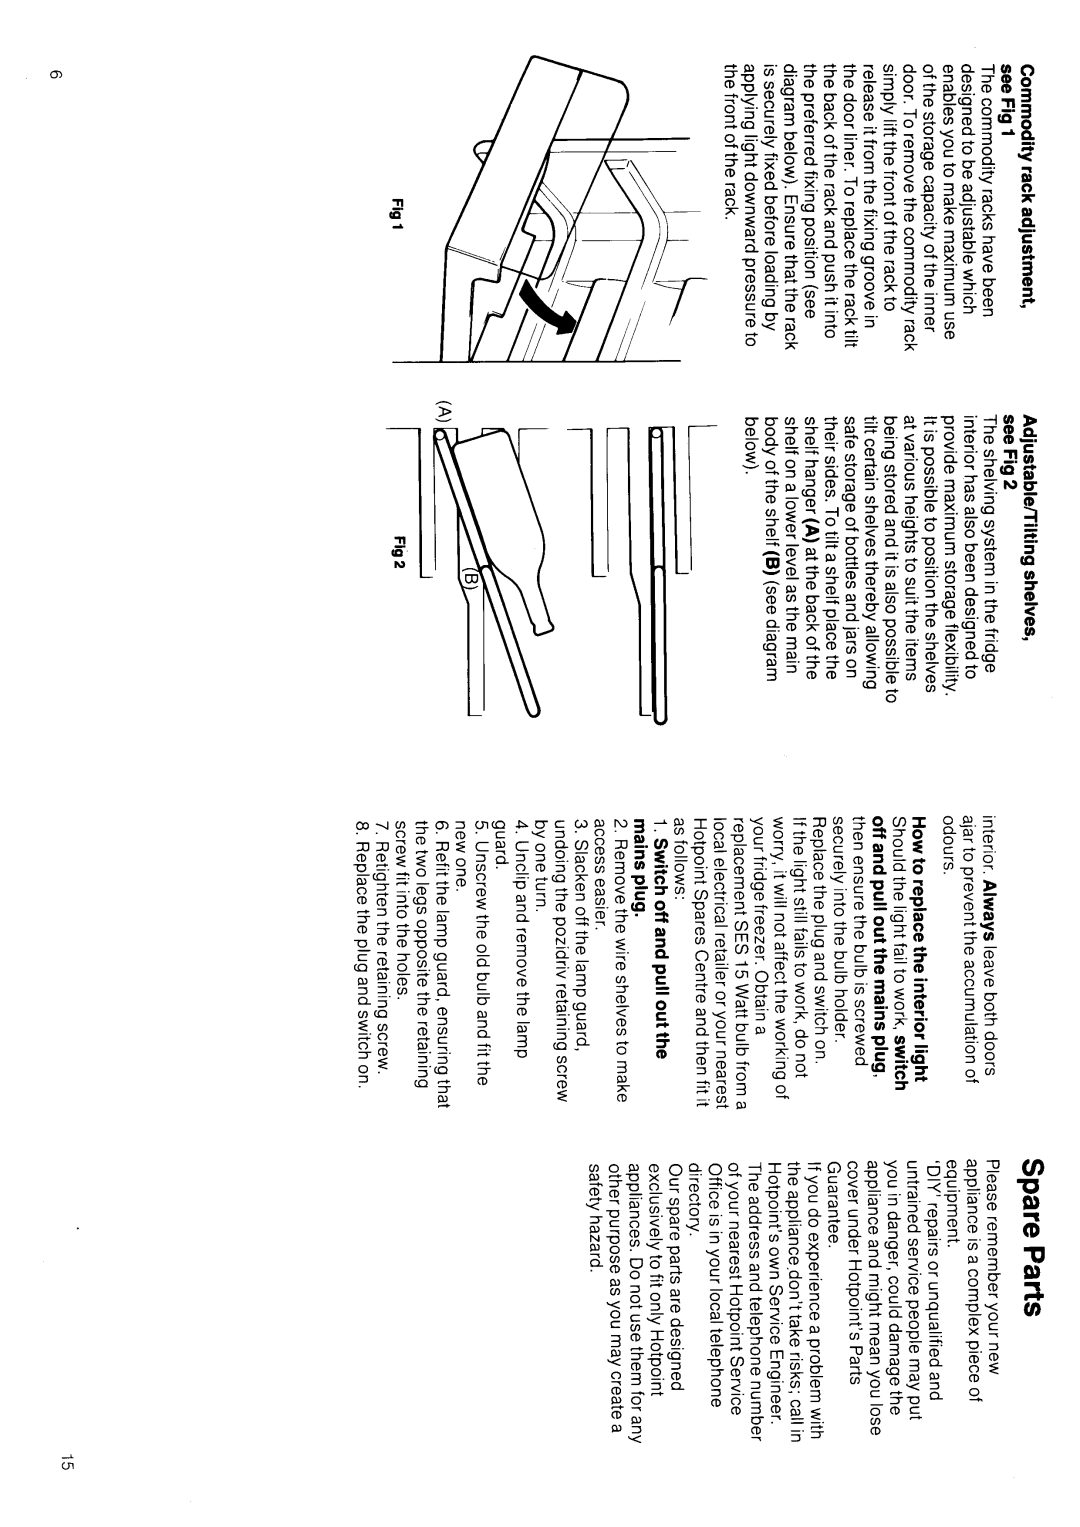 Hotpoint 8562 manual 